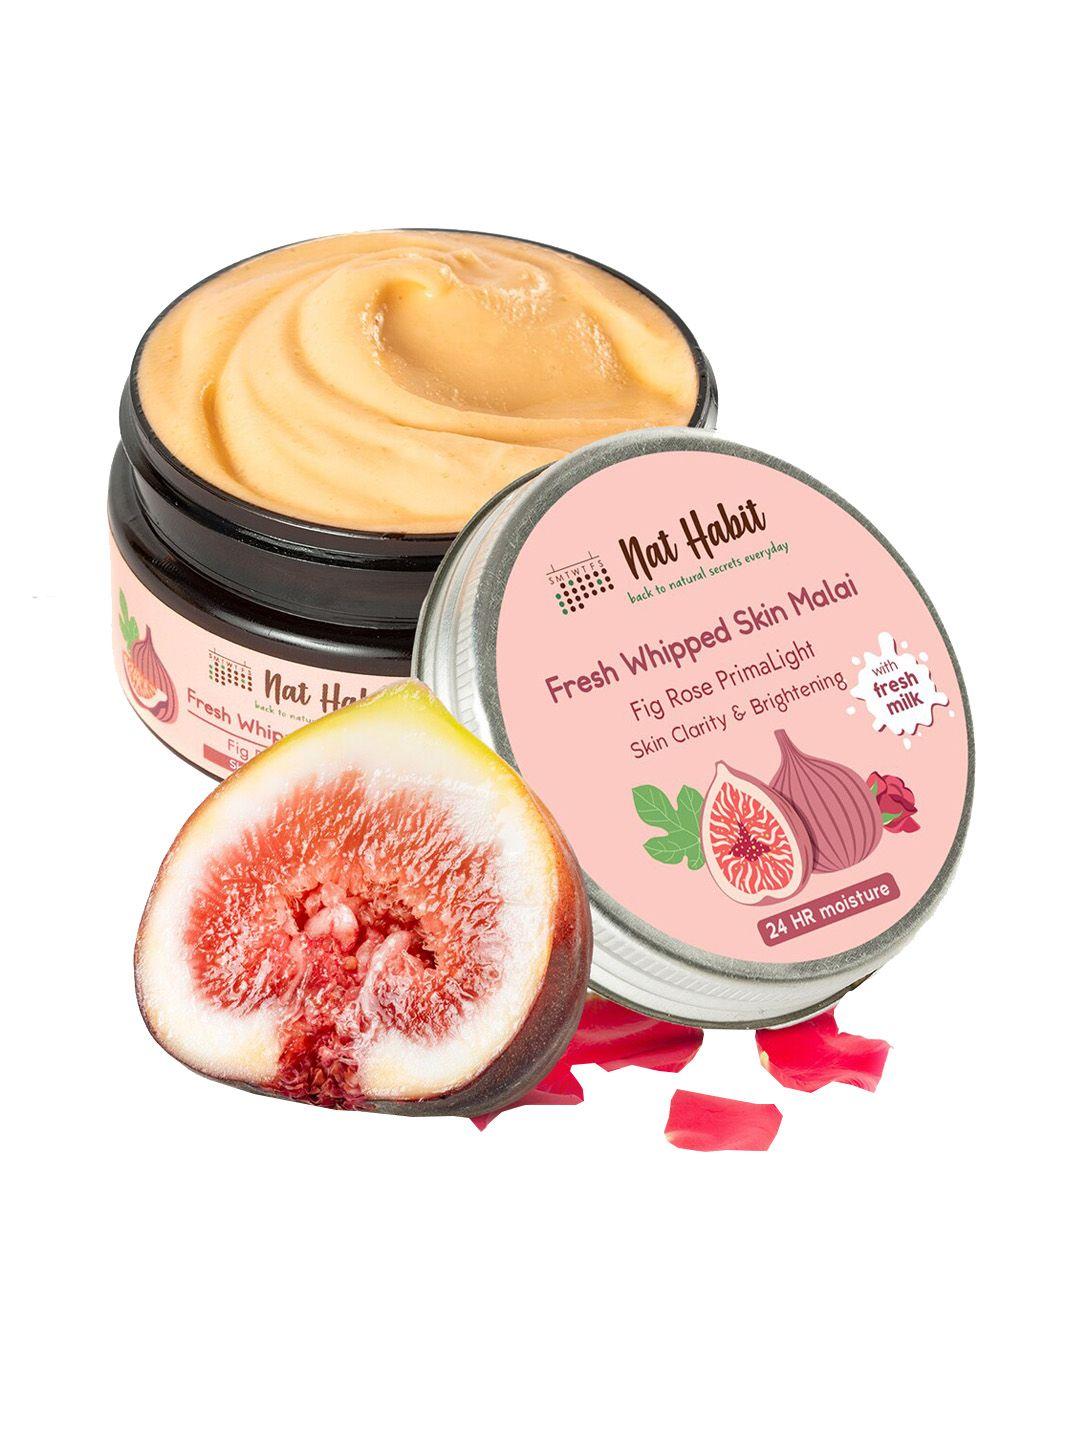 nat habit fig rose prima light body butter for 24 hr body moisturisation skin clarity & brightening - 120ml